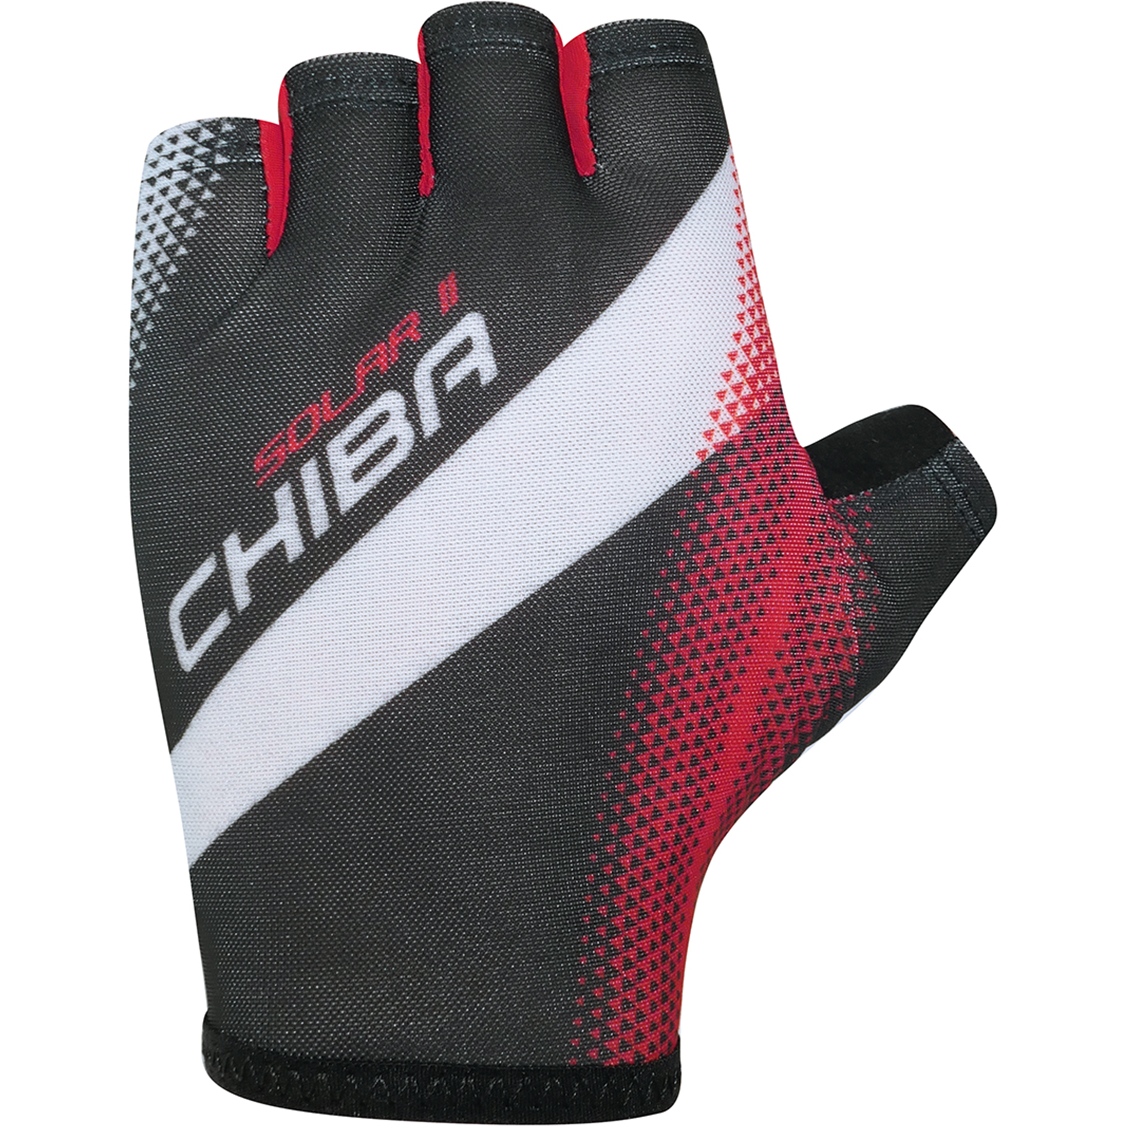 Image of Chiba Solar II Bike Gloves - black/red